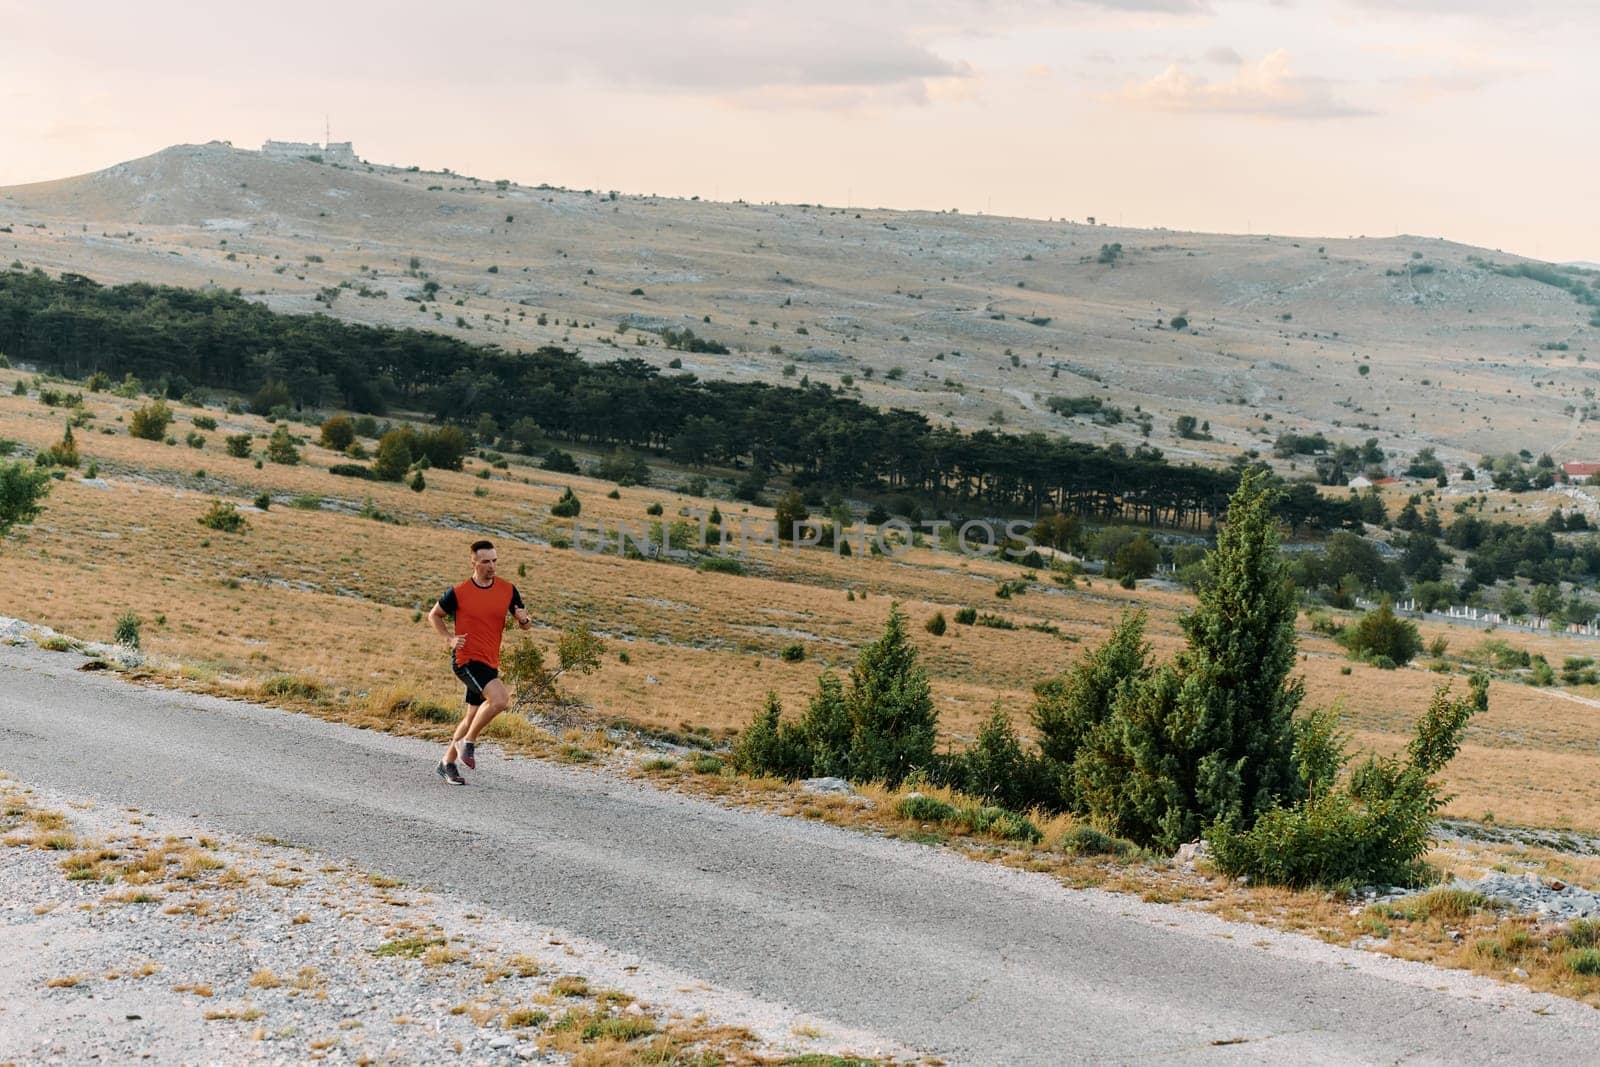 Determined Athlete Running Through Rugged Mountain Terrain at Sunrise. by dotshock